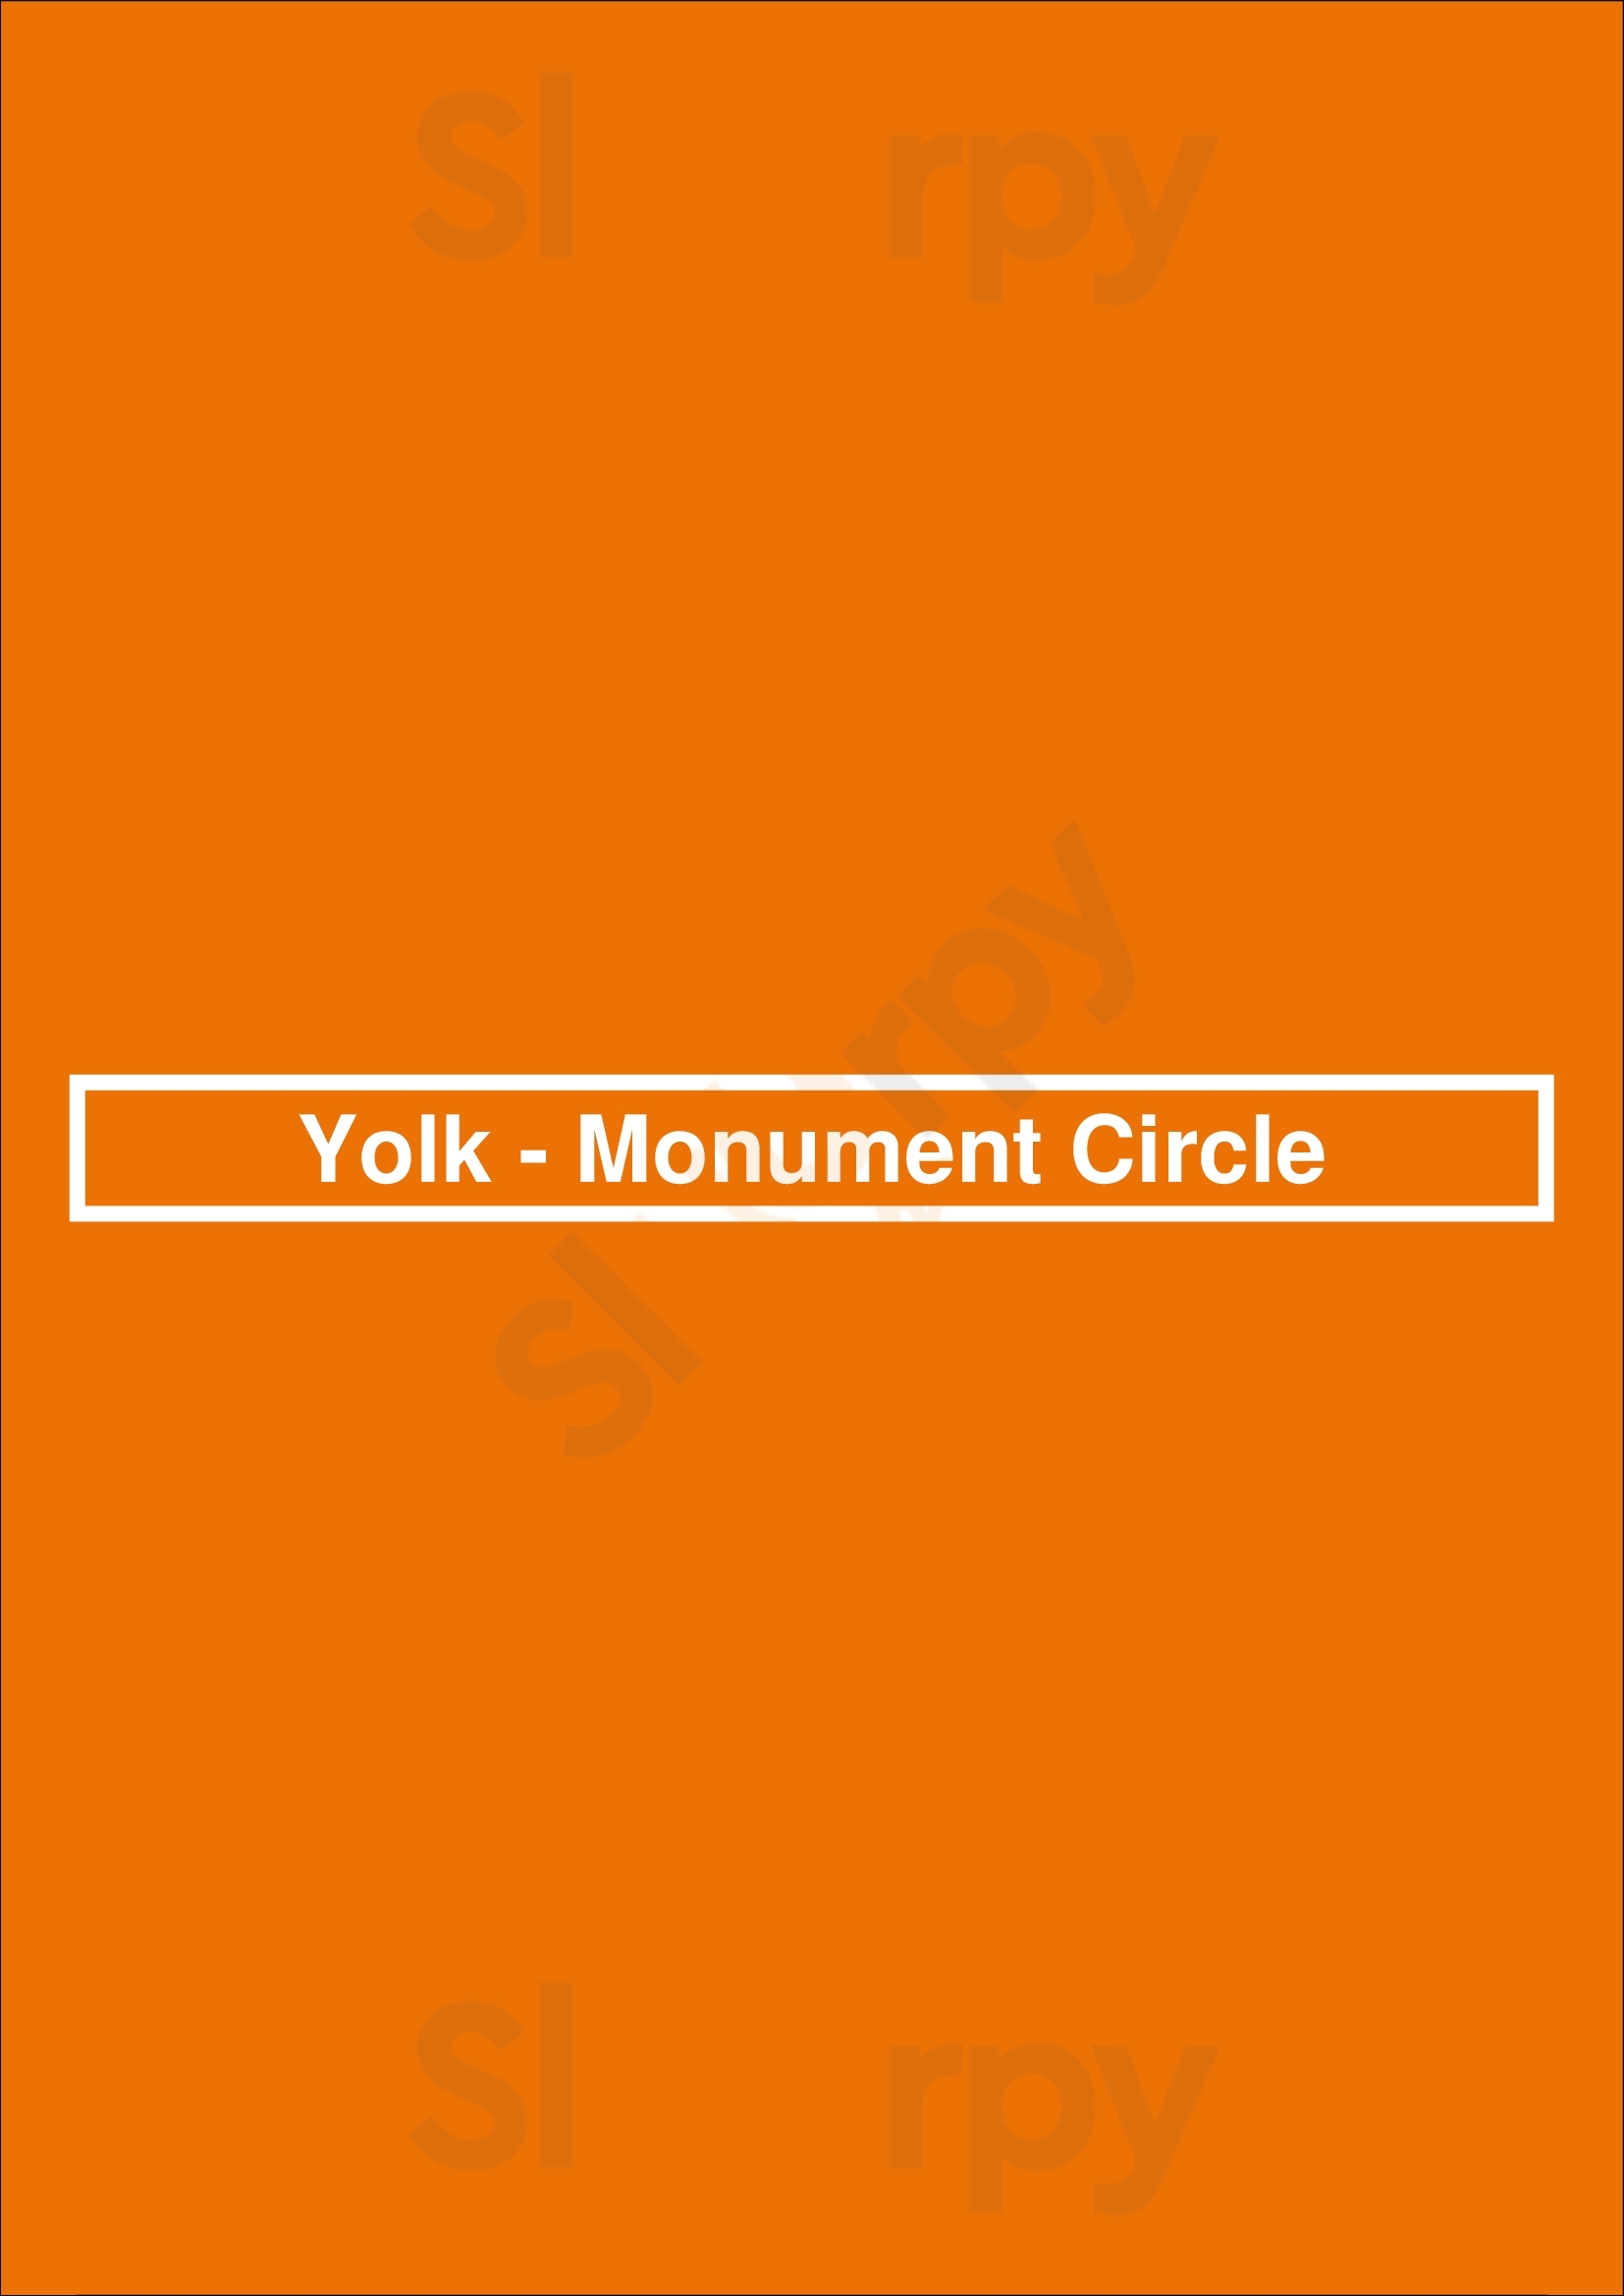 Yolk - Monument Circle Indianapolis Menu - 1